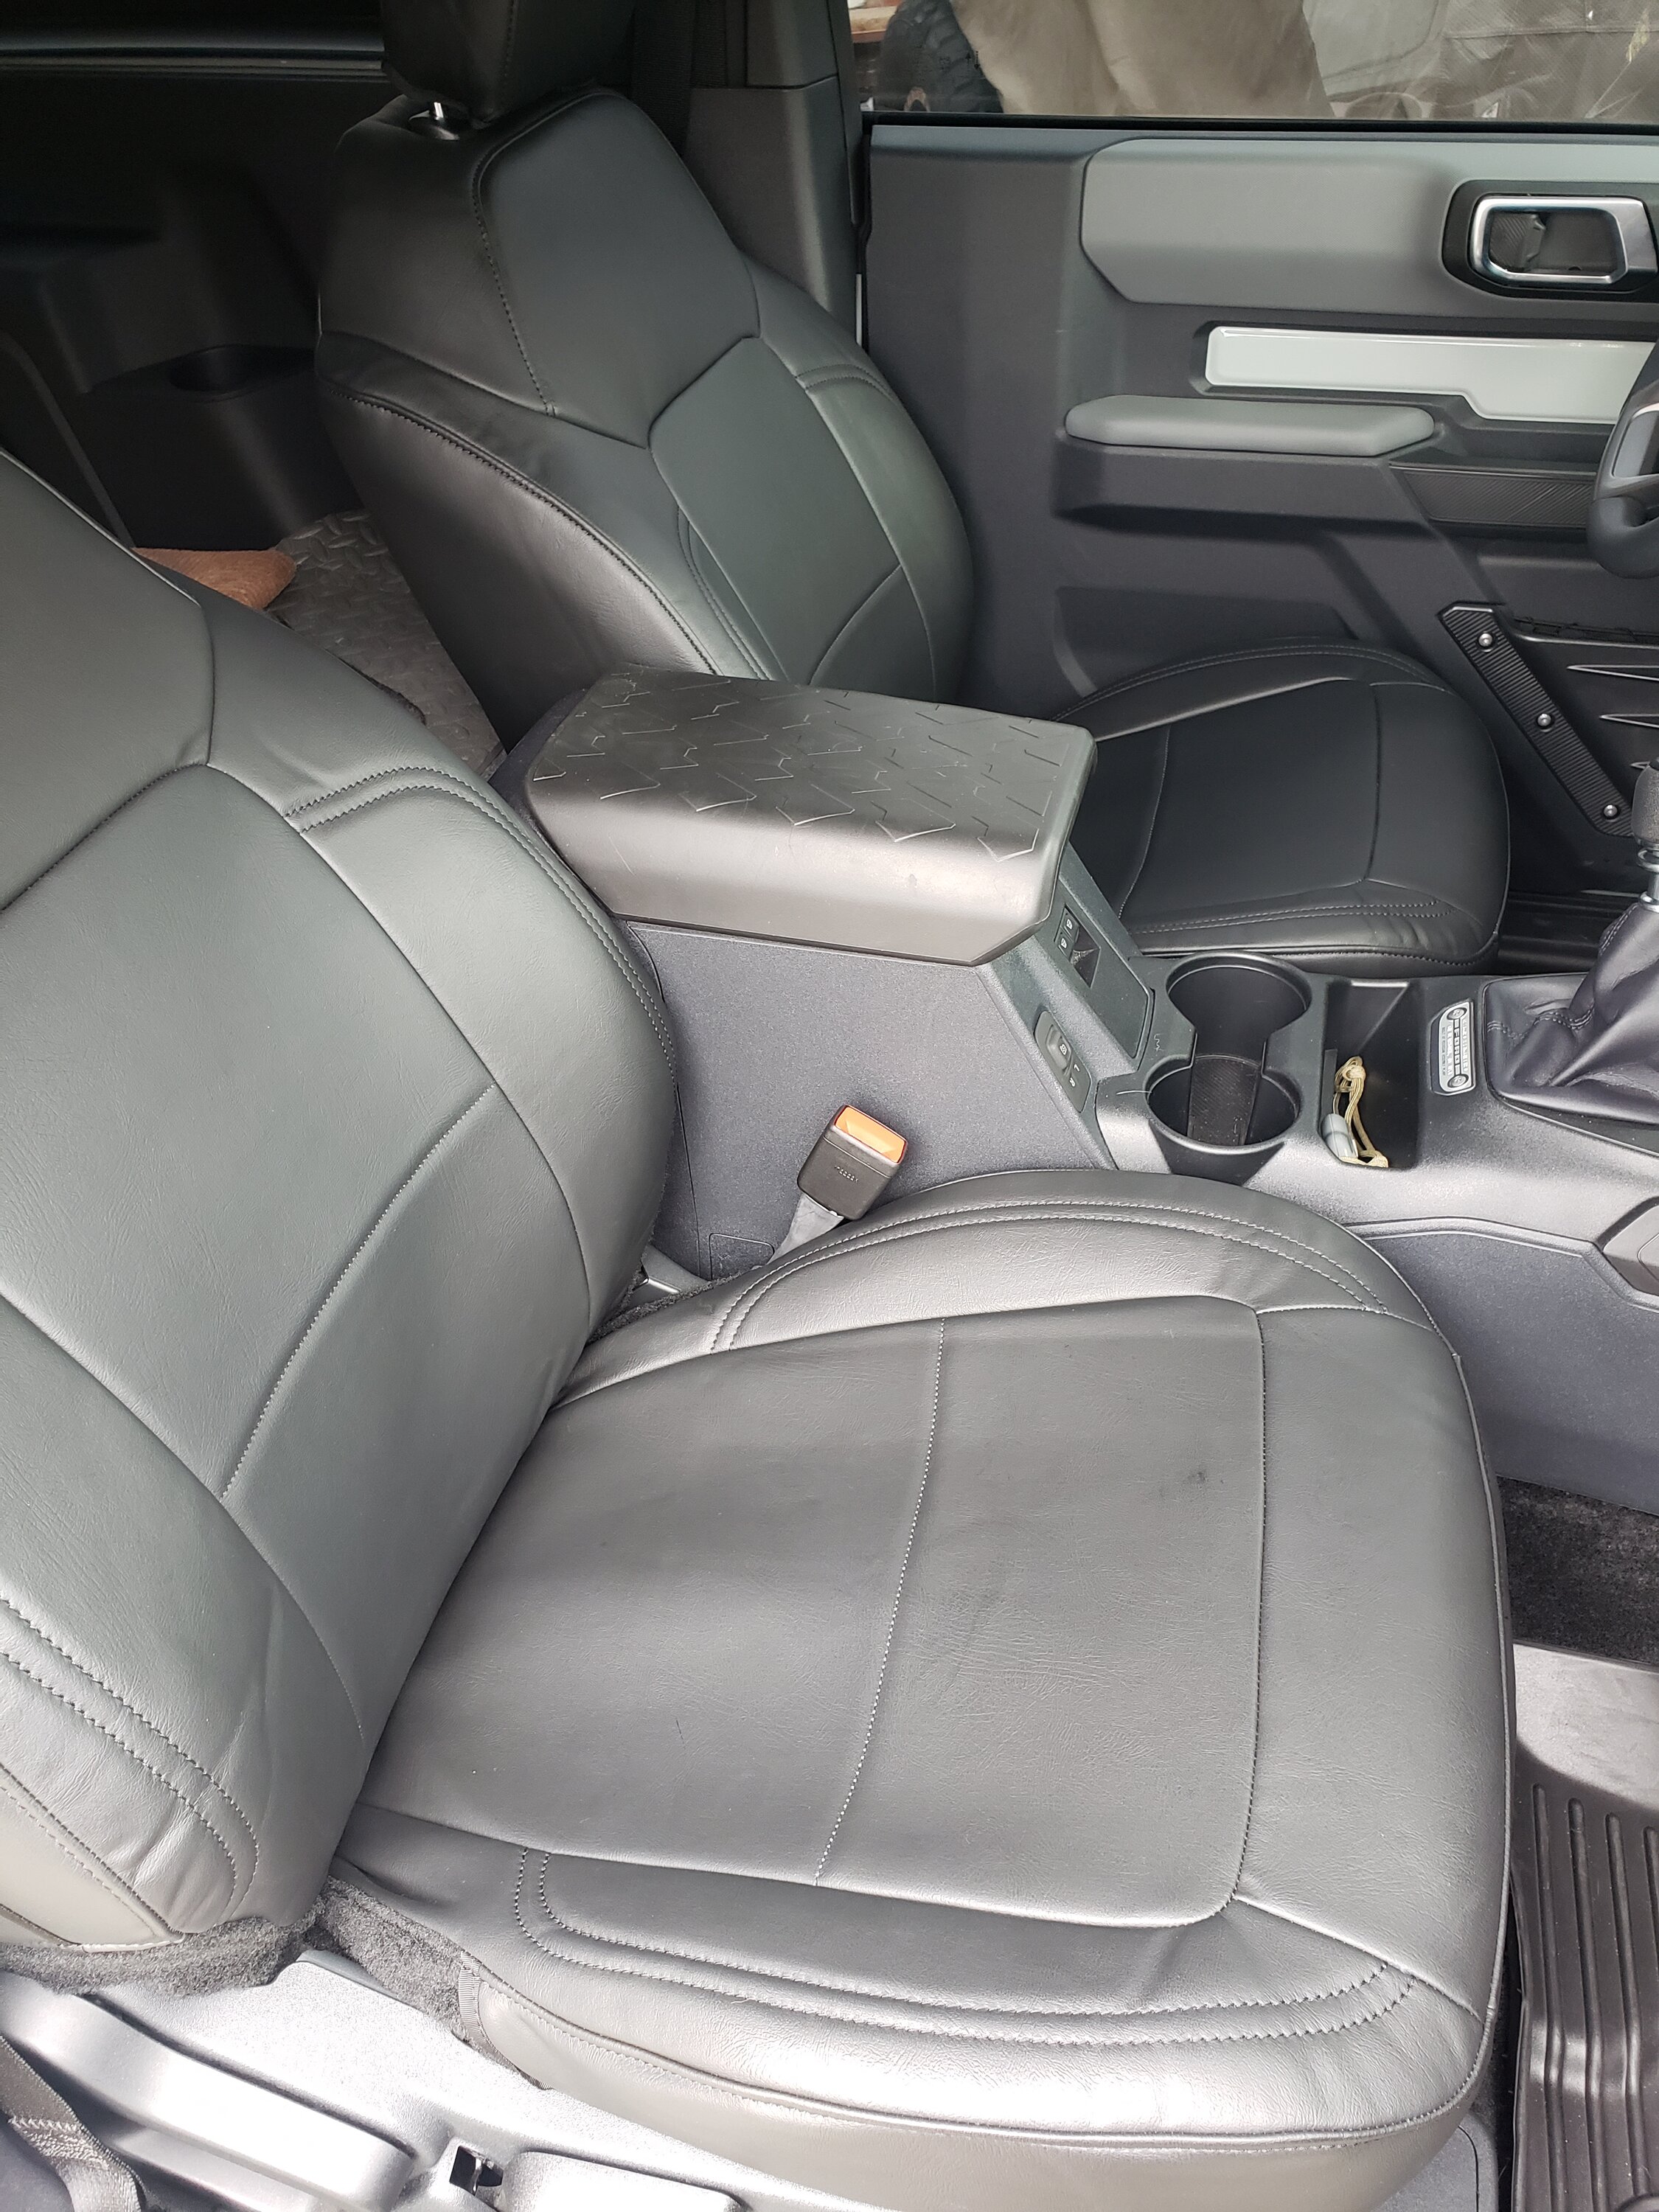 Ford Bronco PRP Seat Covers Look Great in my Base SAS 2 door! 20220723_170619